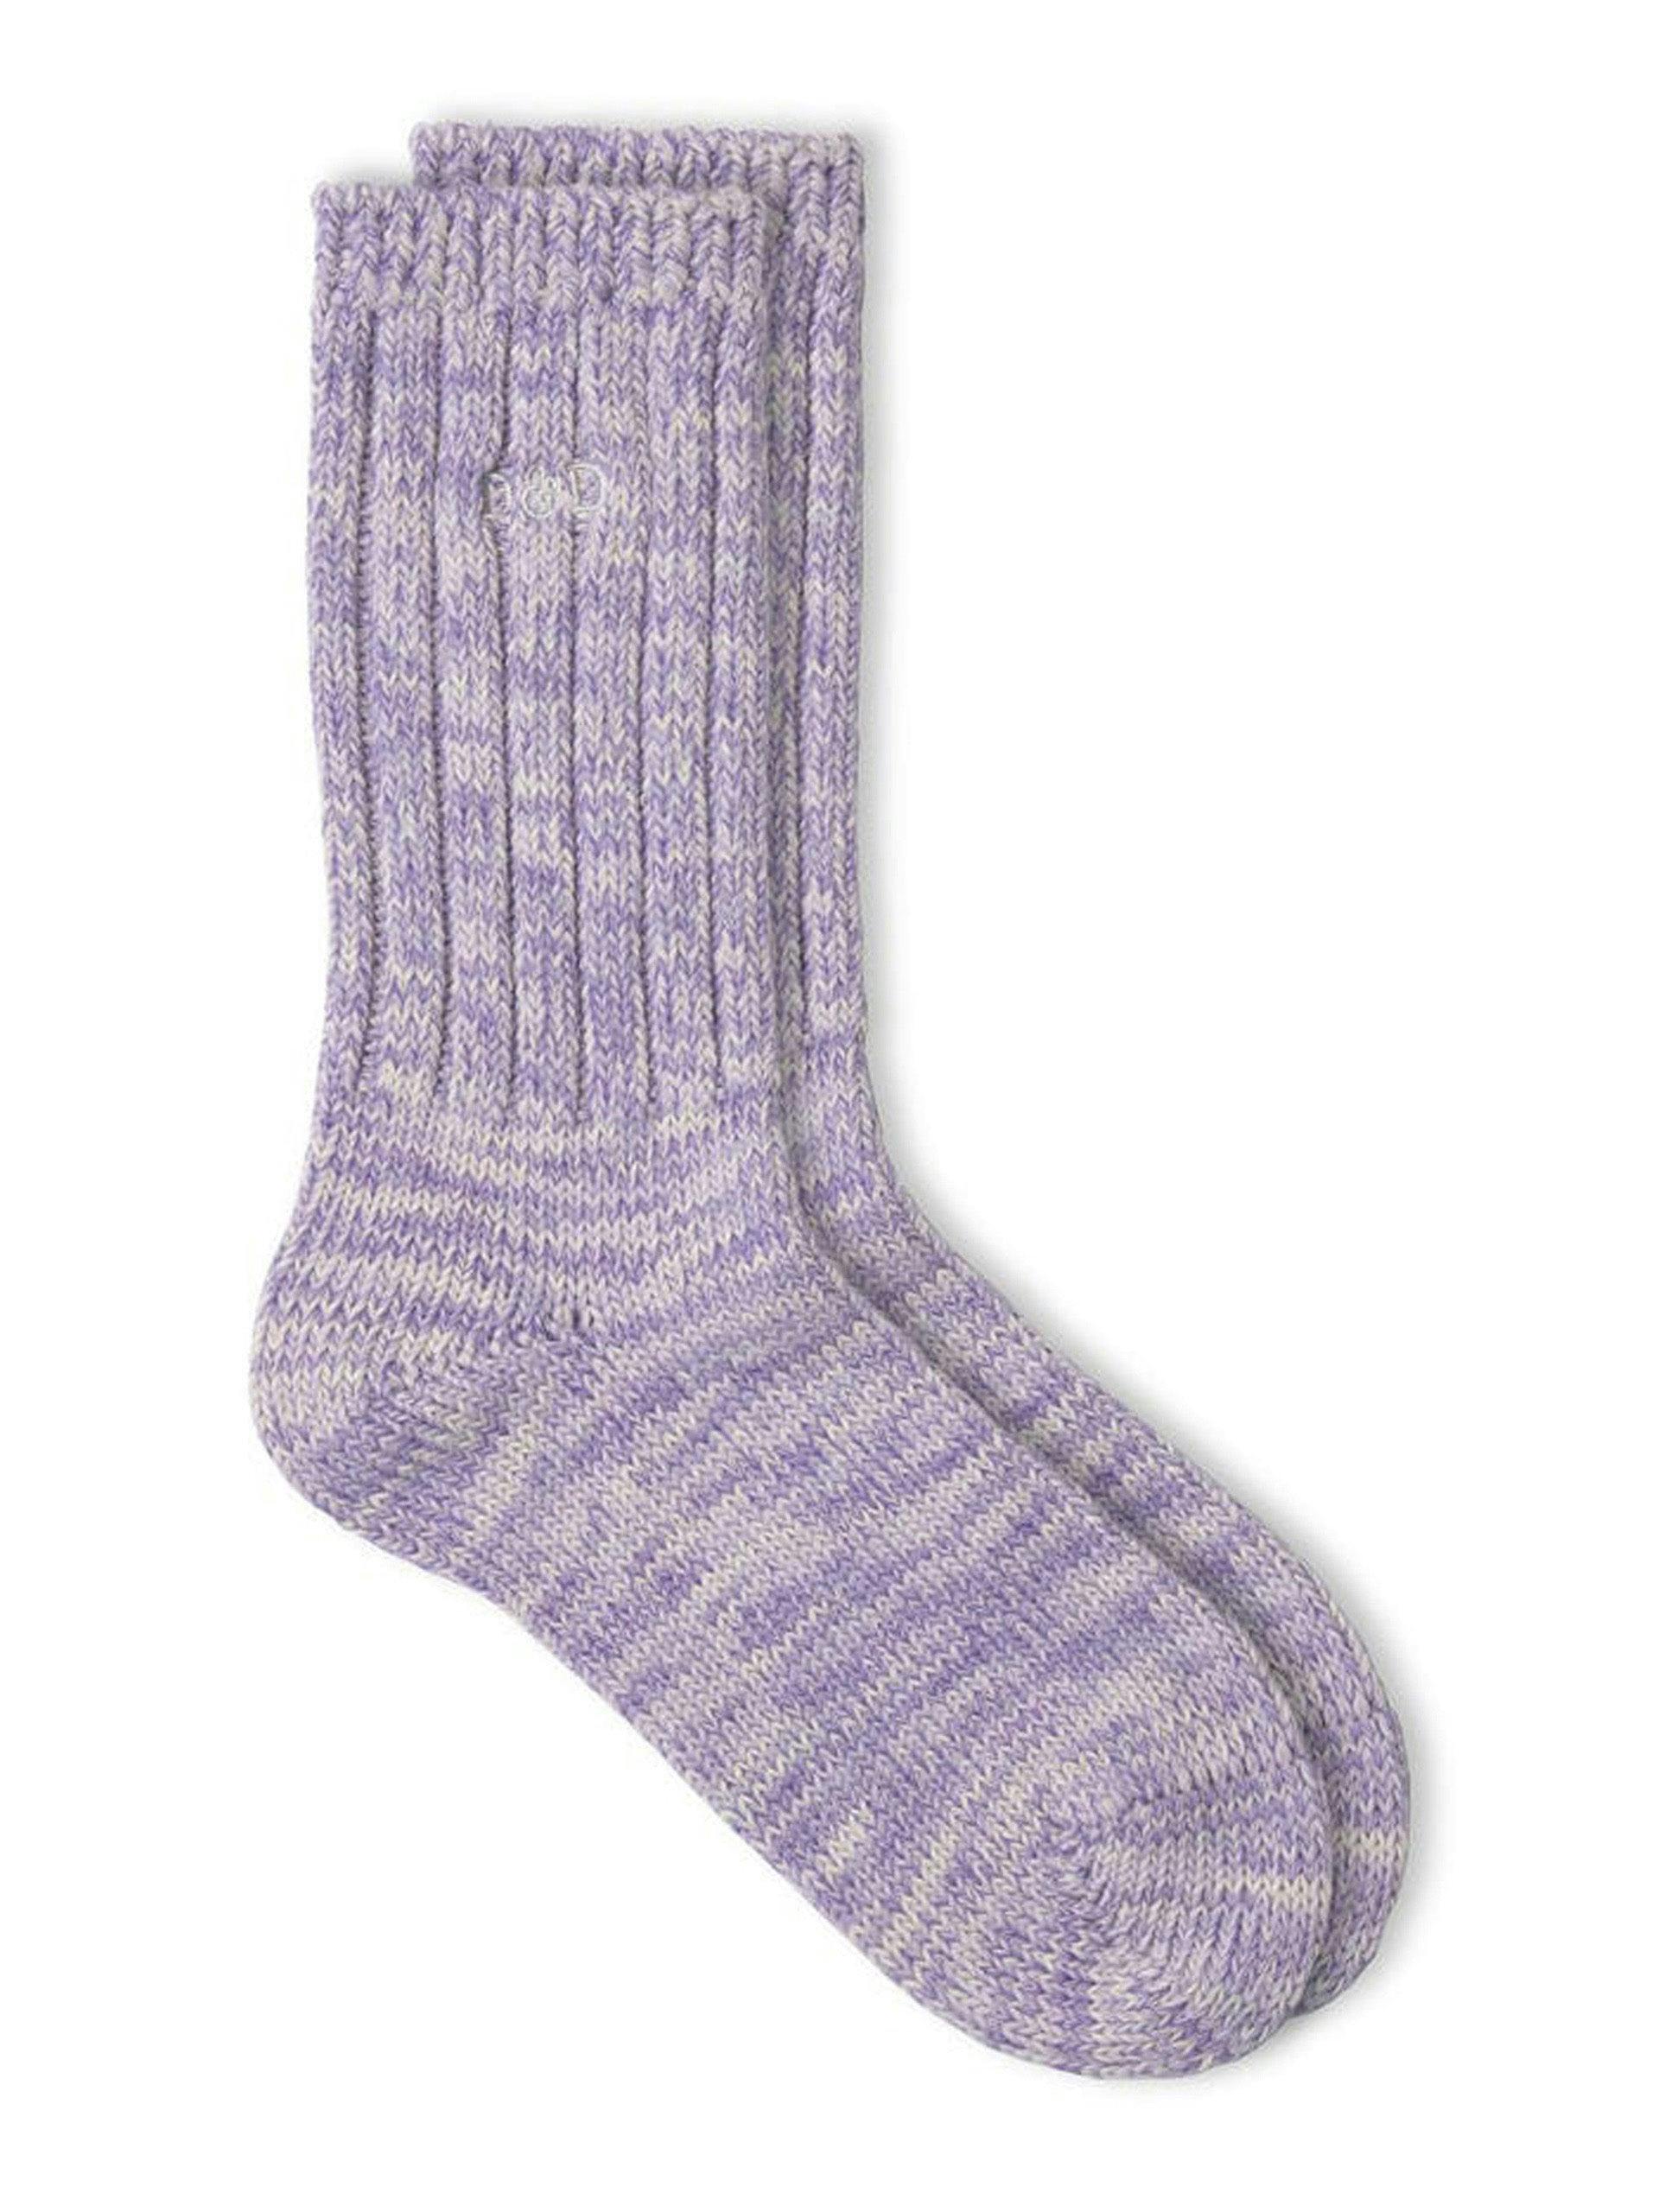 Women's lavender Really Warm socks